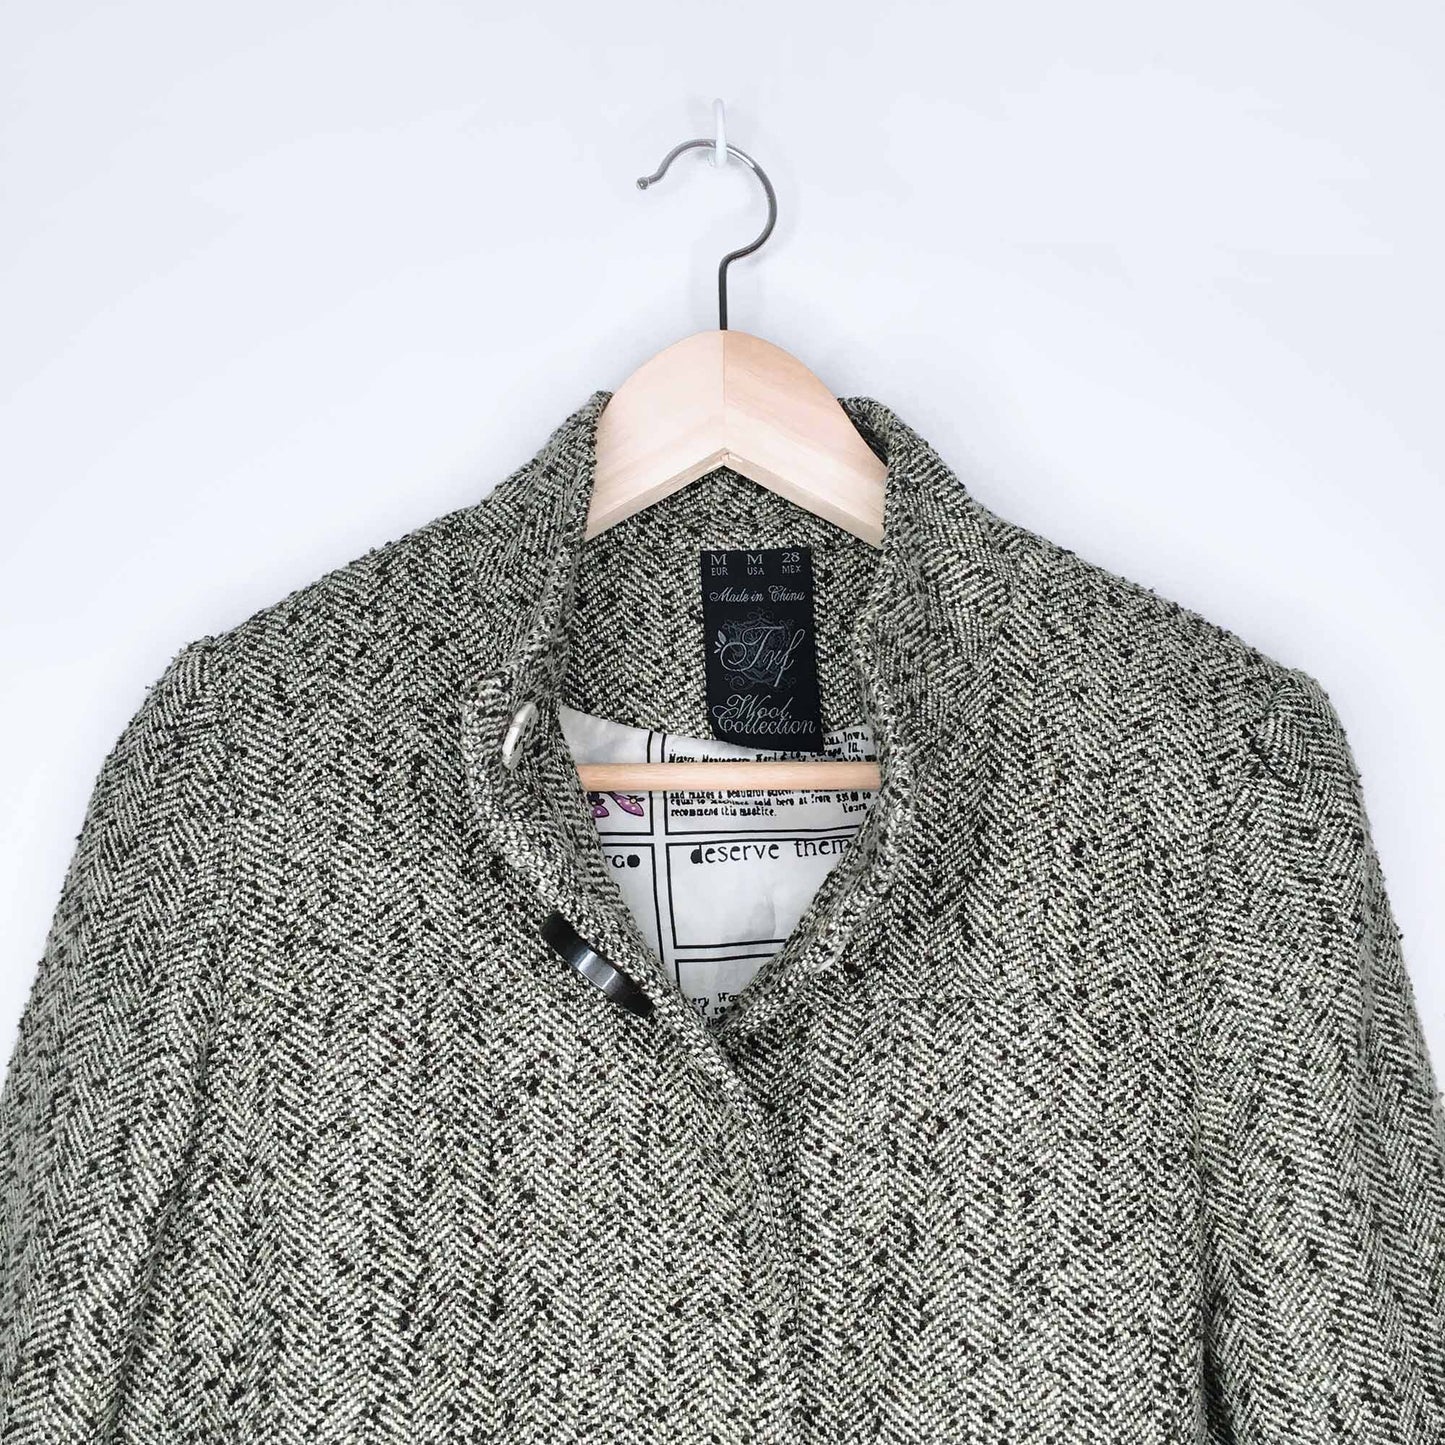 Zara TRF wool collection herringbone jacket - size Medium